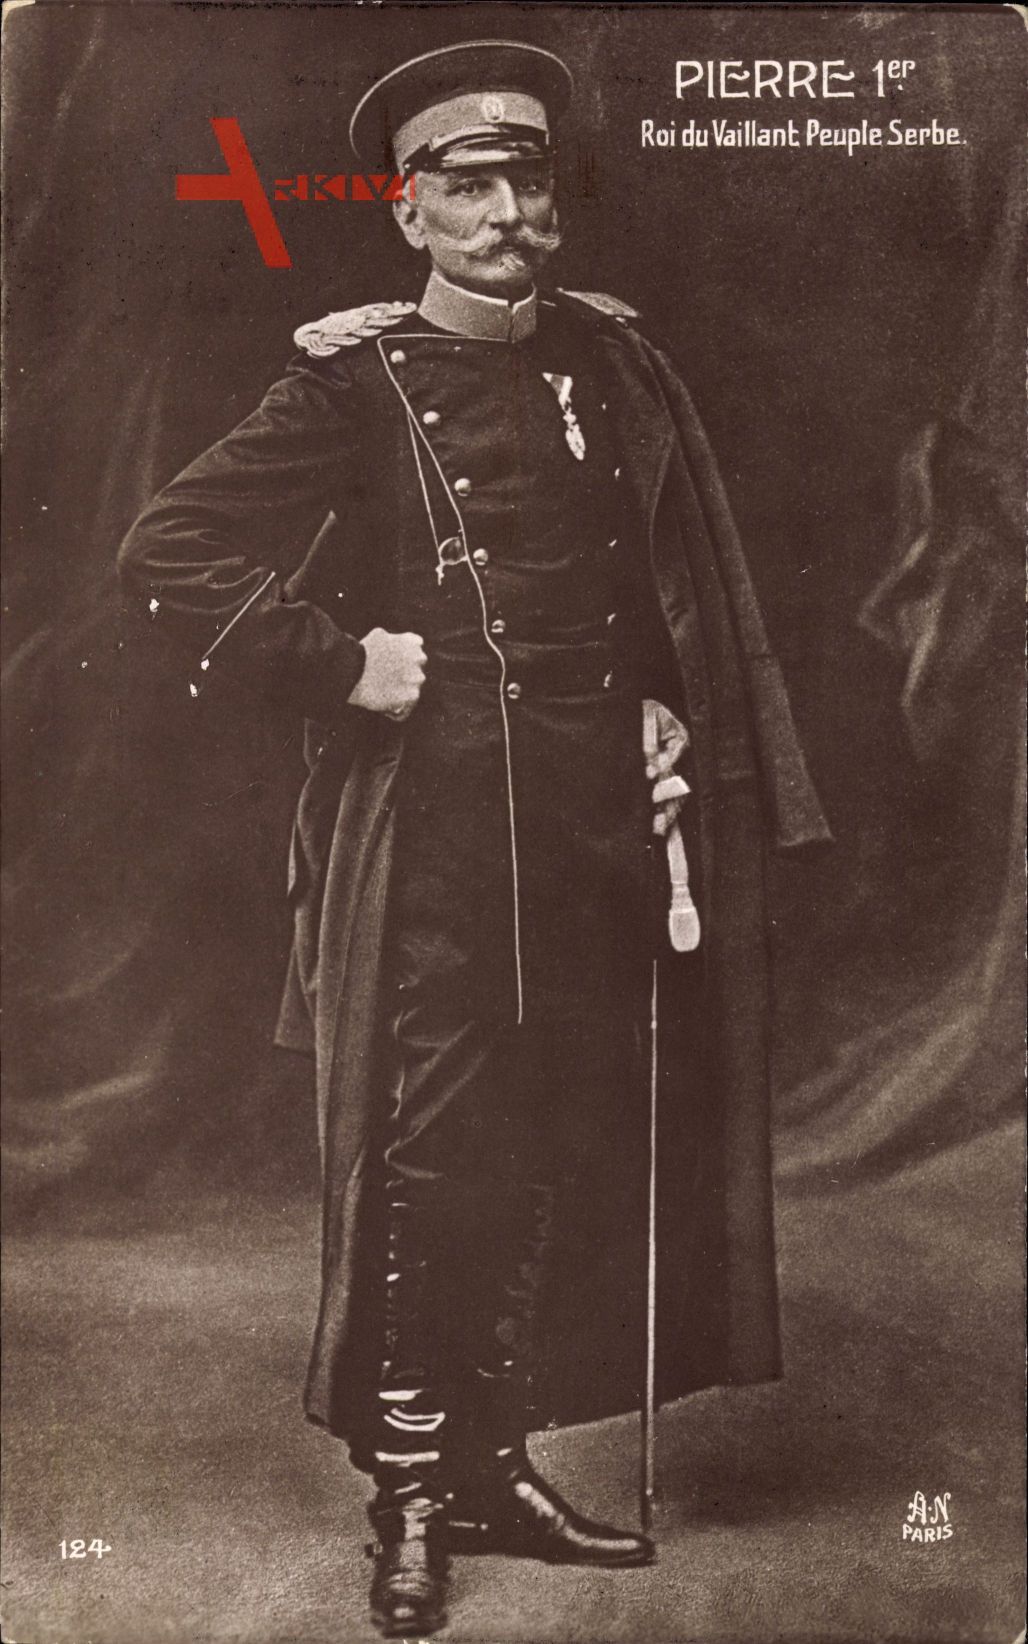 König Peter I. Karadjordjevic von Jugoslawien, Serbien, Portrait, Uniform